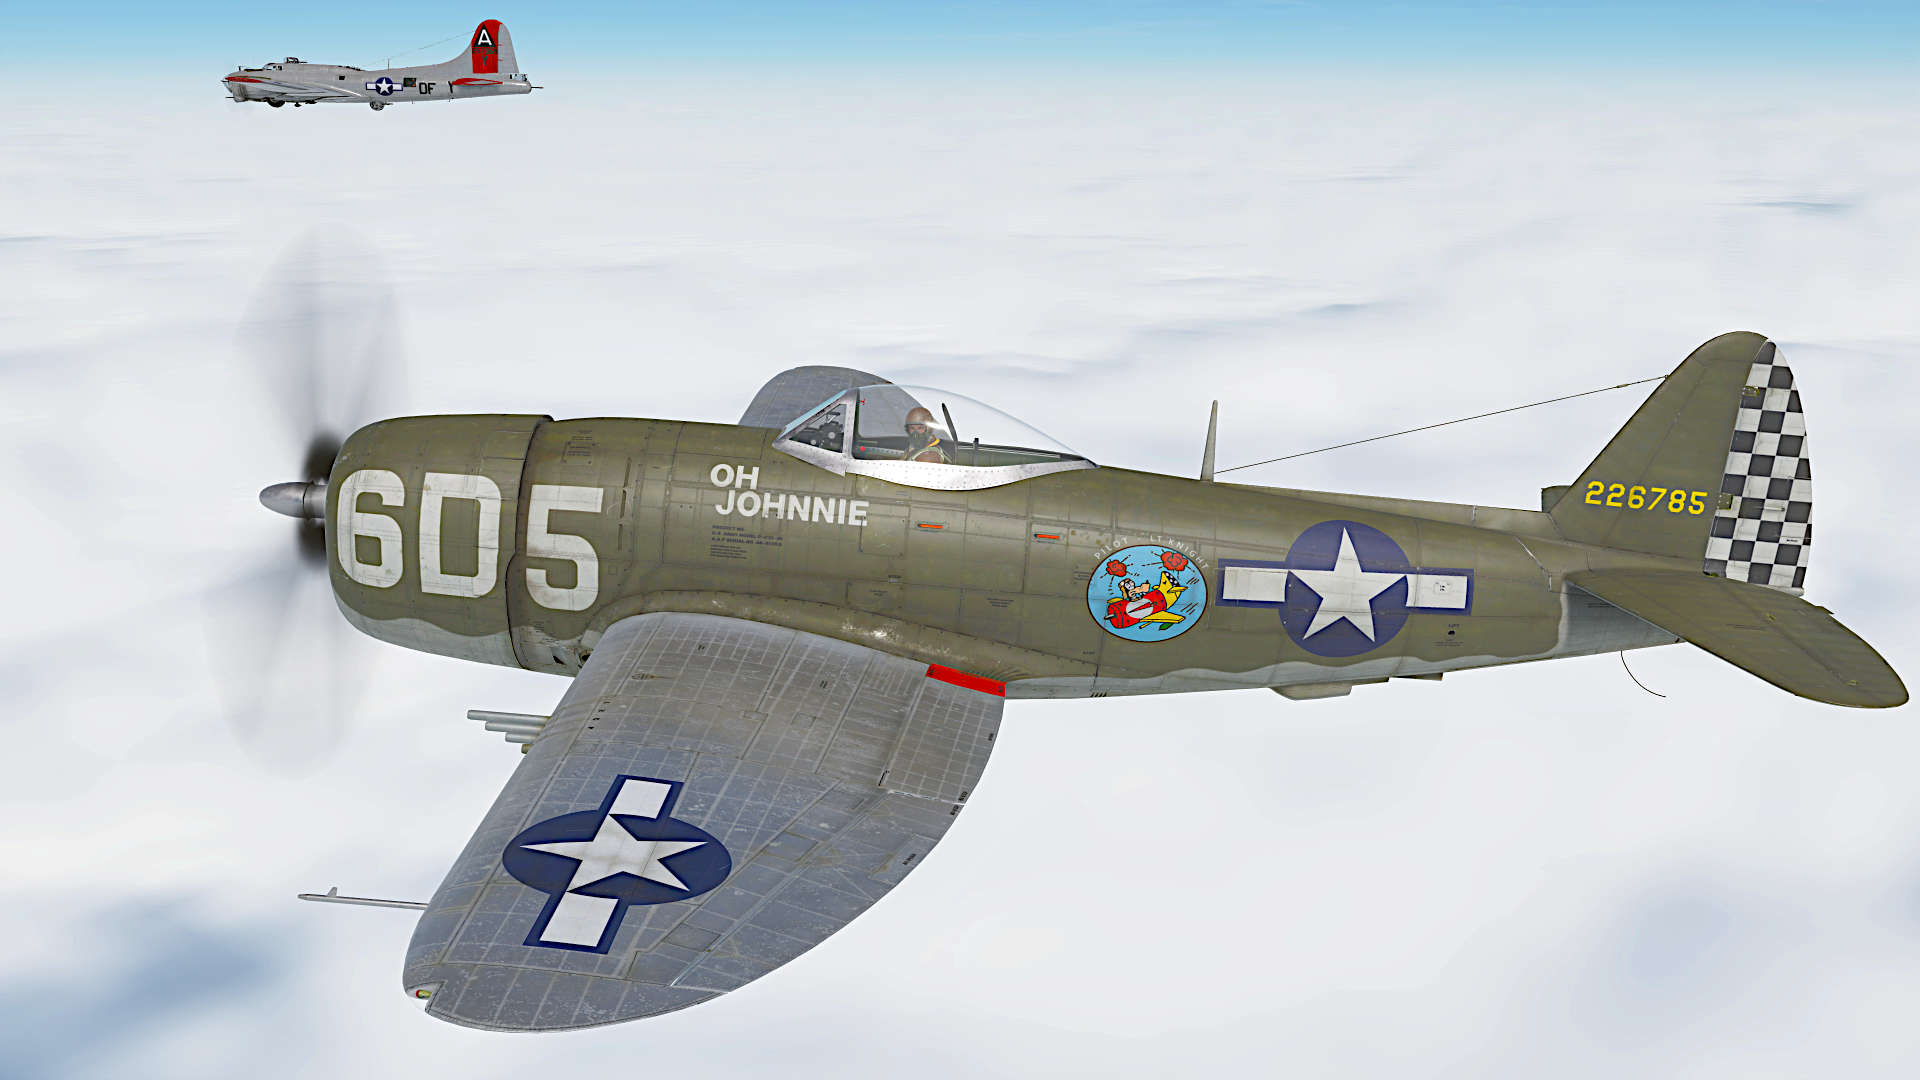 P-47D "OH JOHNNIE" Flown by Lt Raymond Knight of 346th FS, 350th FG , Italy 1945.